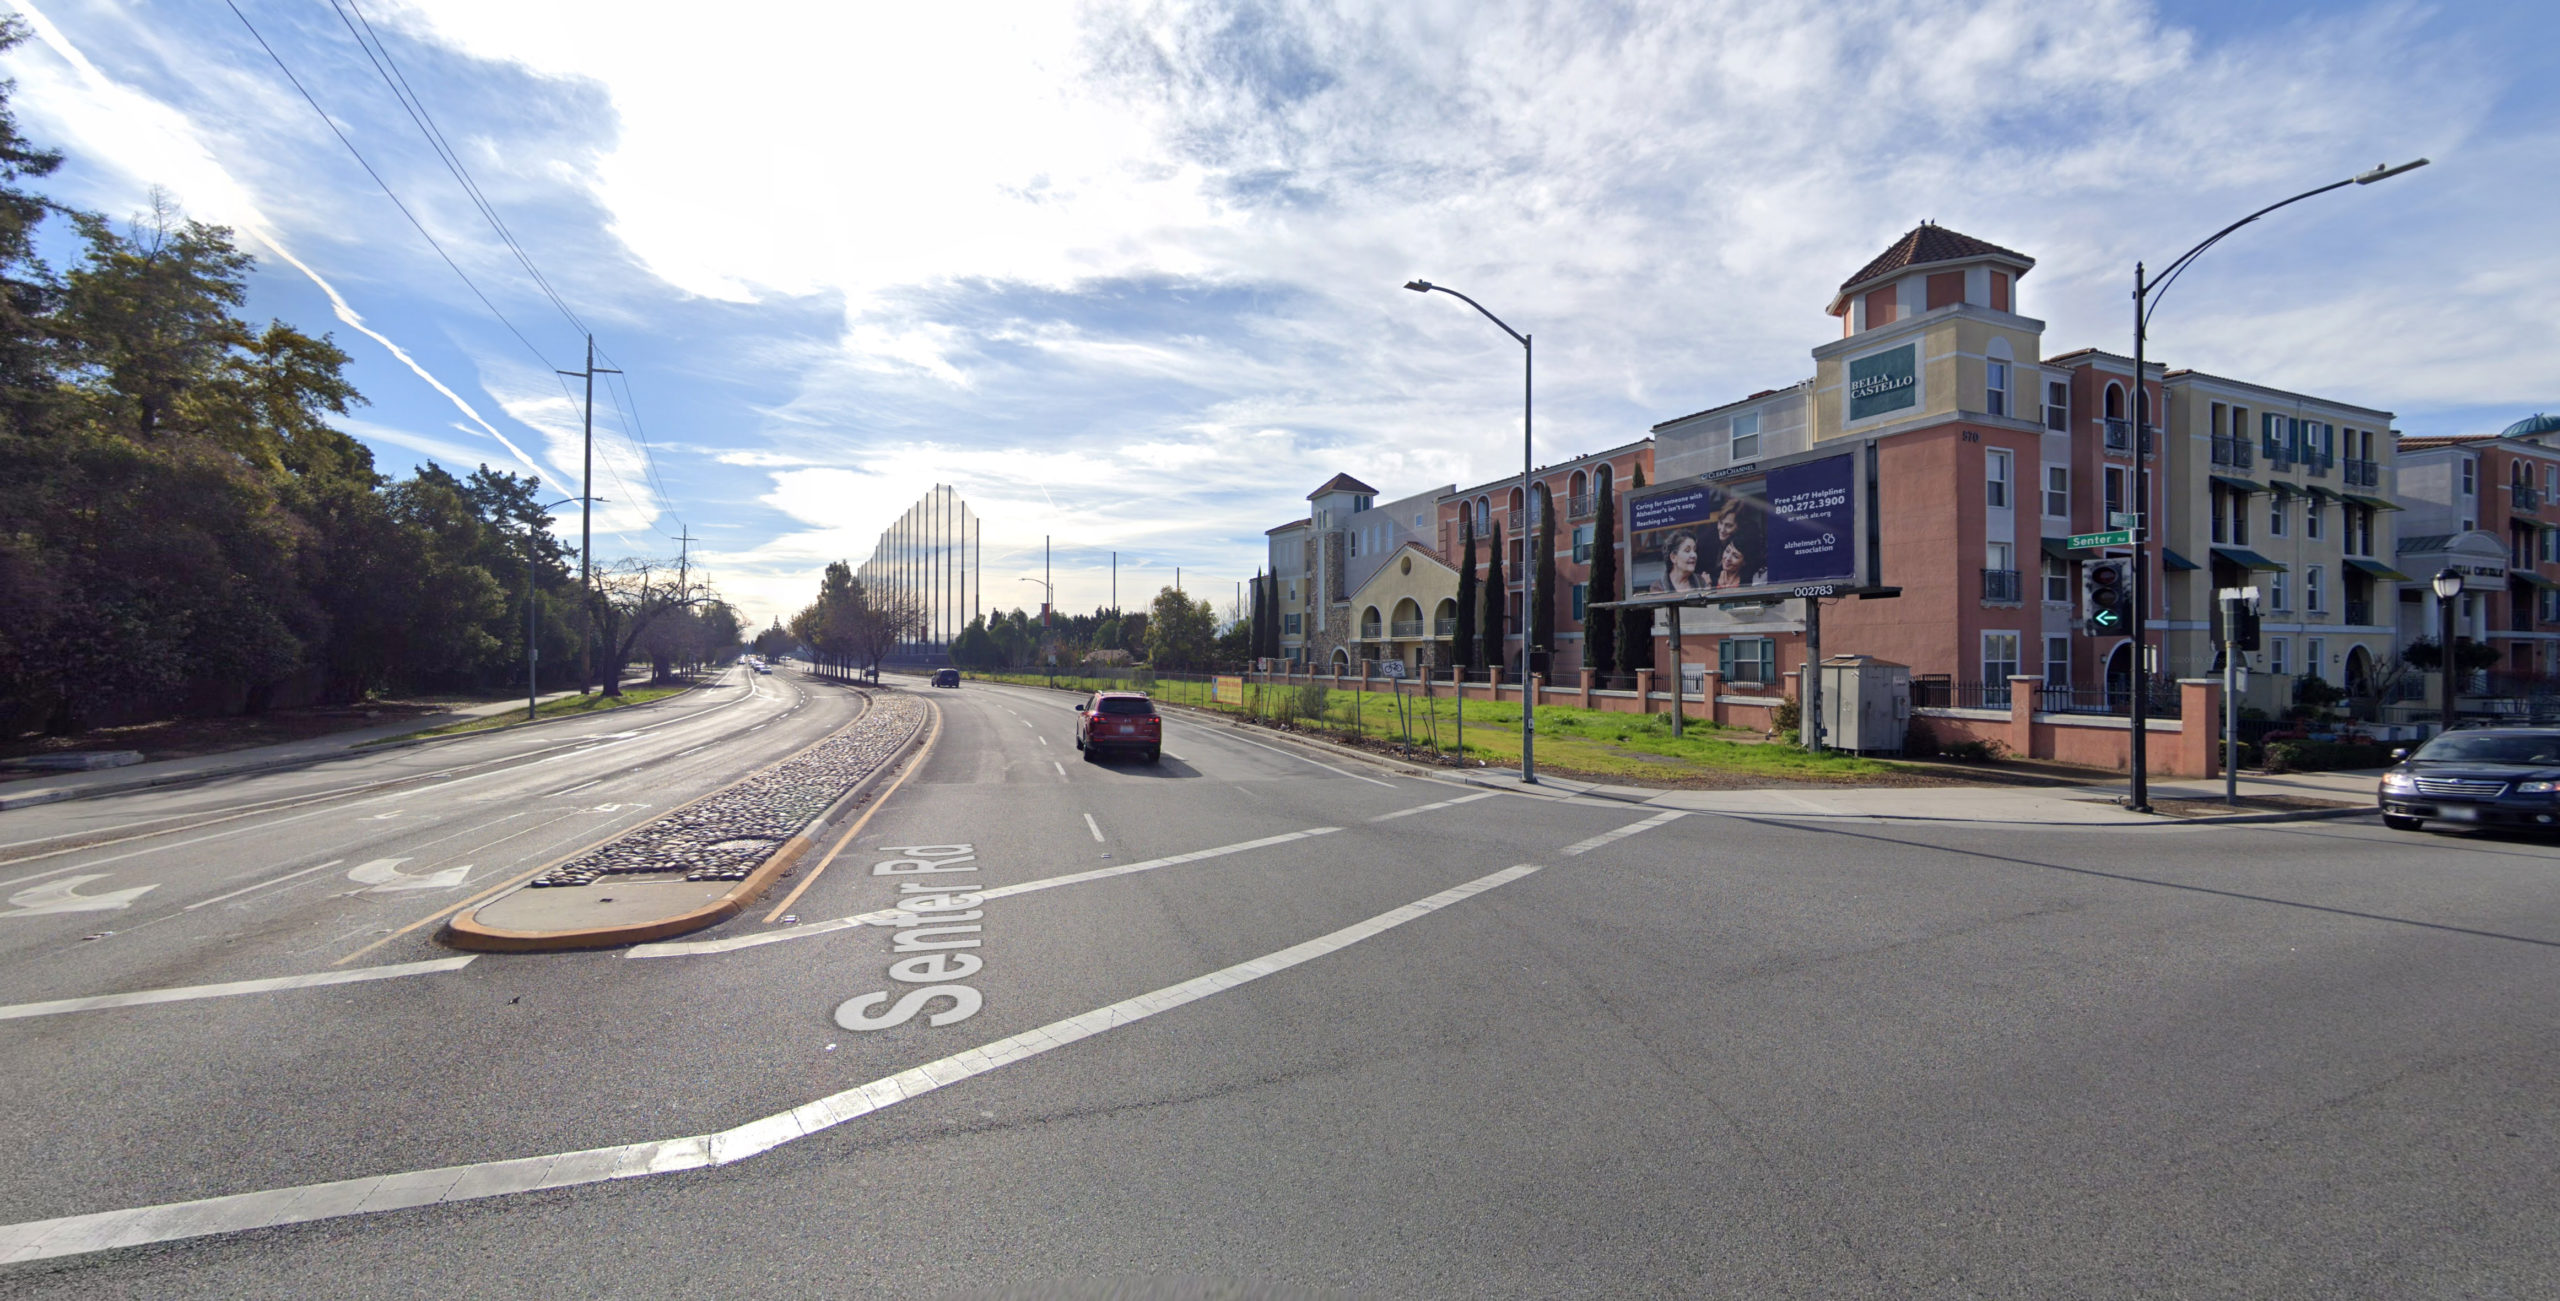 Senter Road Residential Project seen from Keyes Street, image via Google Street View